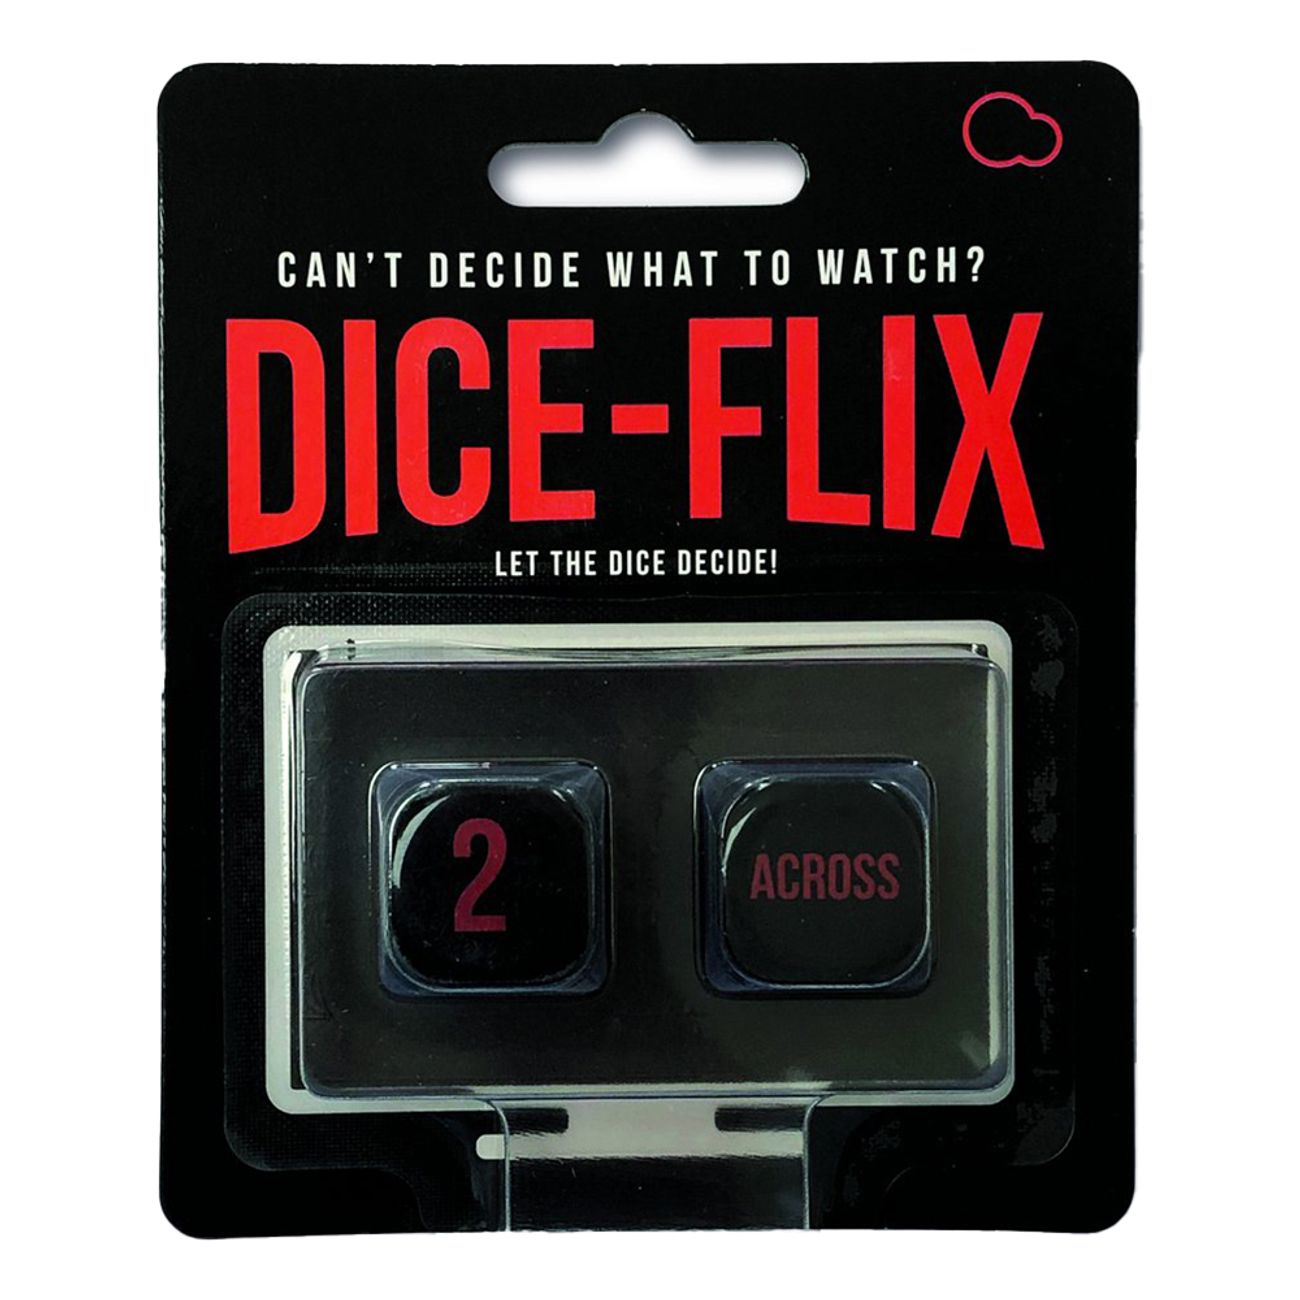 dice-flix-netflixtarning-1